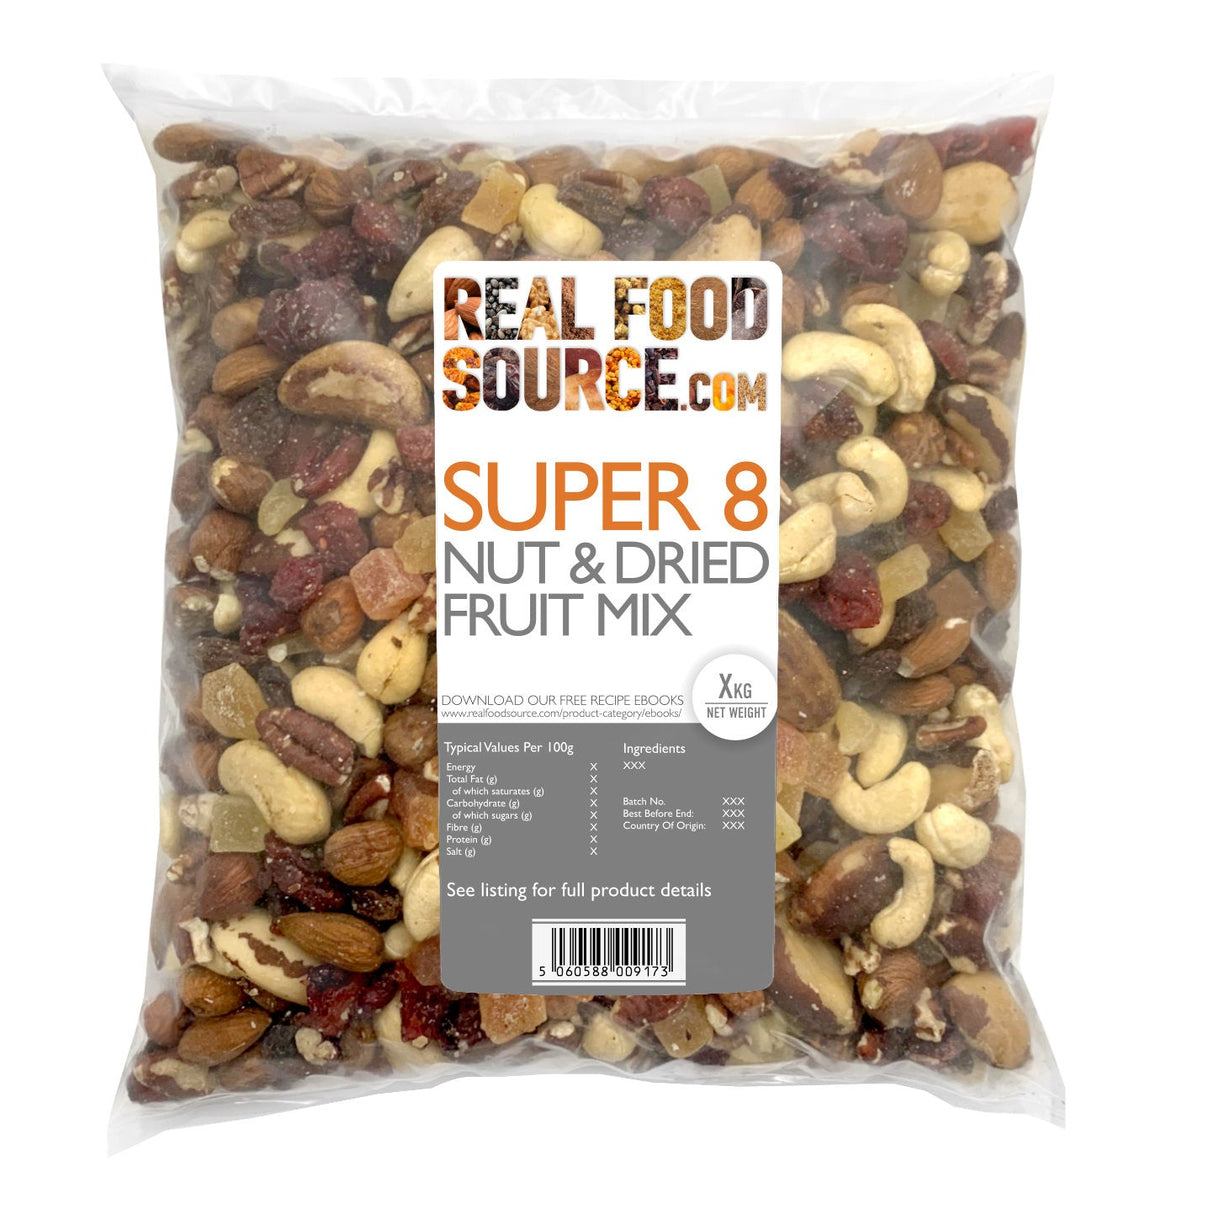 Super 8 Nut & Dried Fruit Mix